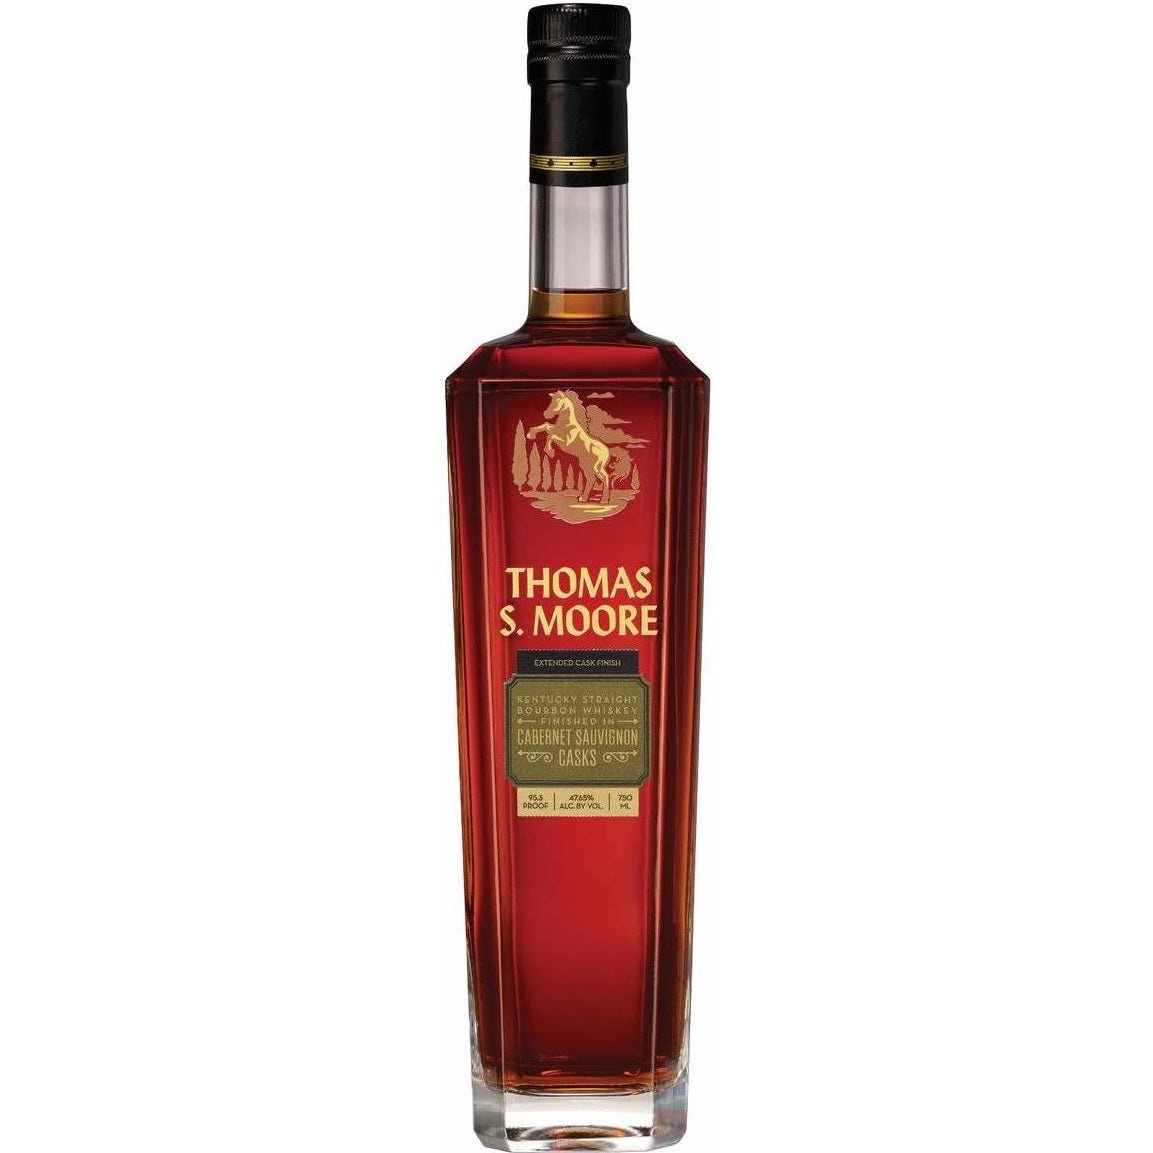 Thomas S. Moore, Cabernet Sauvignon Casks Extended Cask Finish Kentucky Straight Bourbon Whiskey 750ml